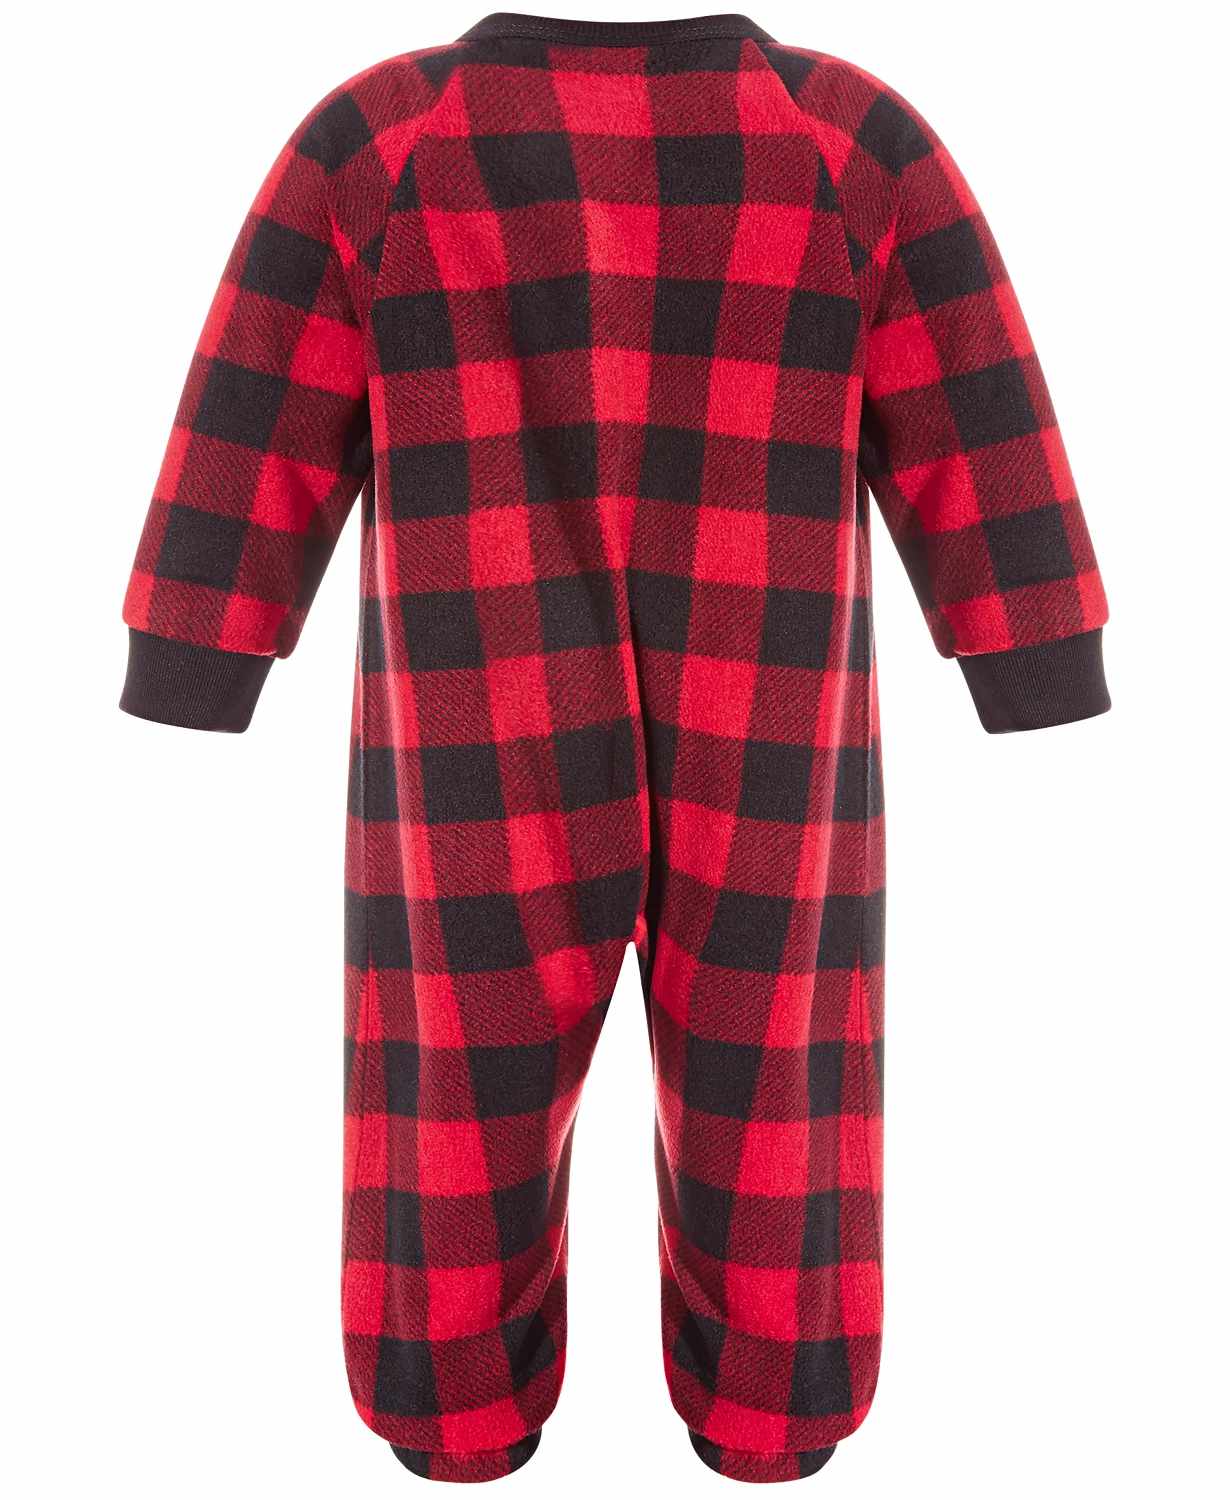 Family Pajamas Baby Matching Red Check Printed Footed Pajamas